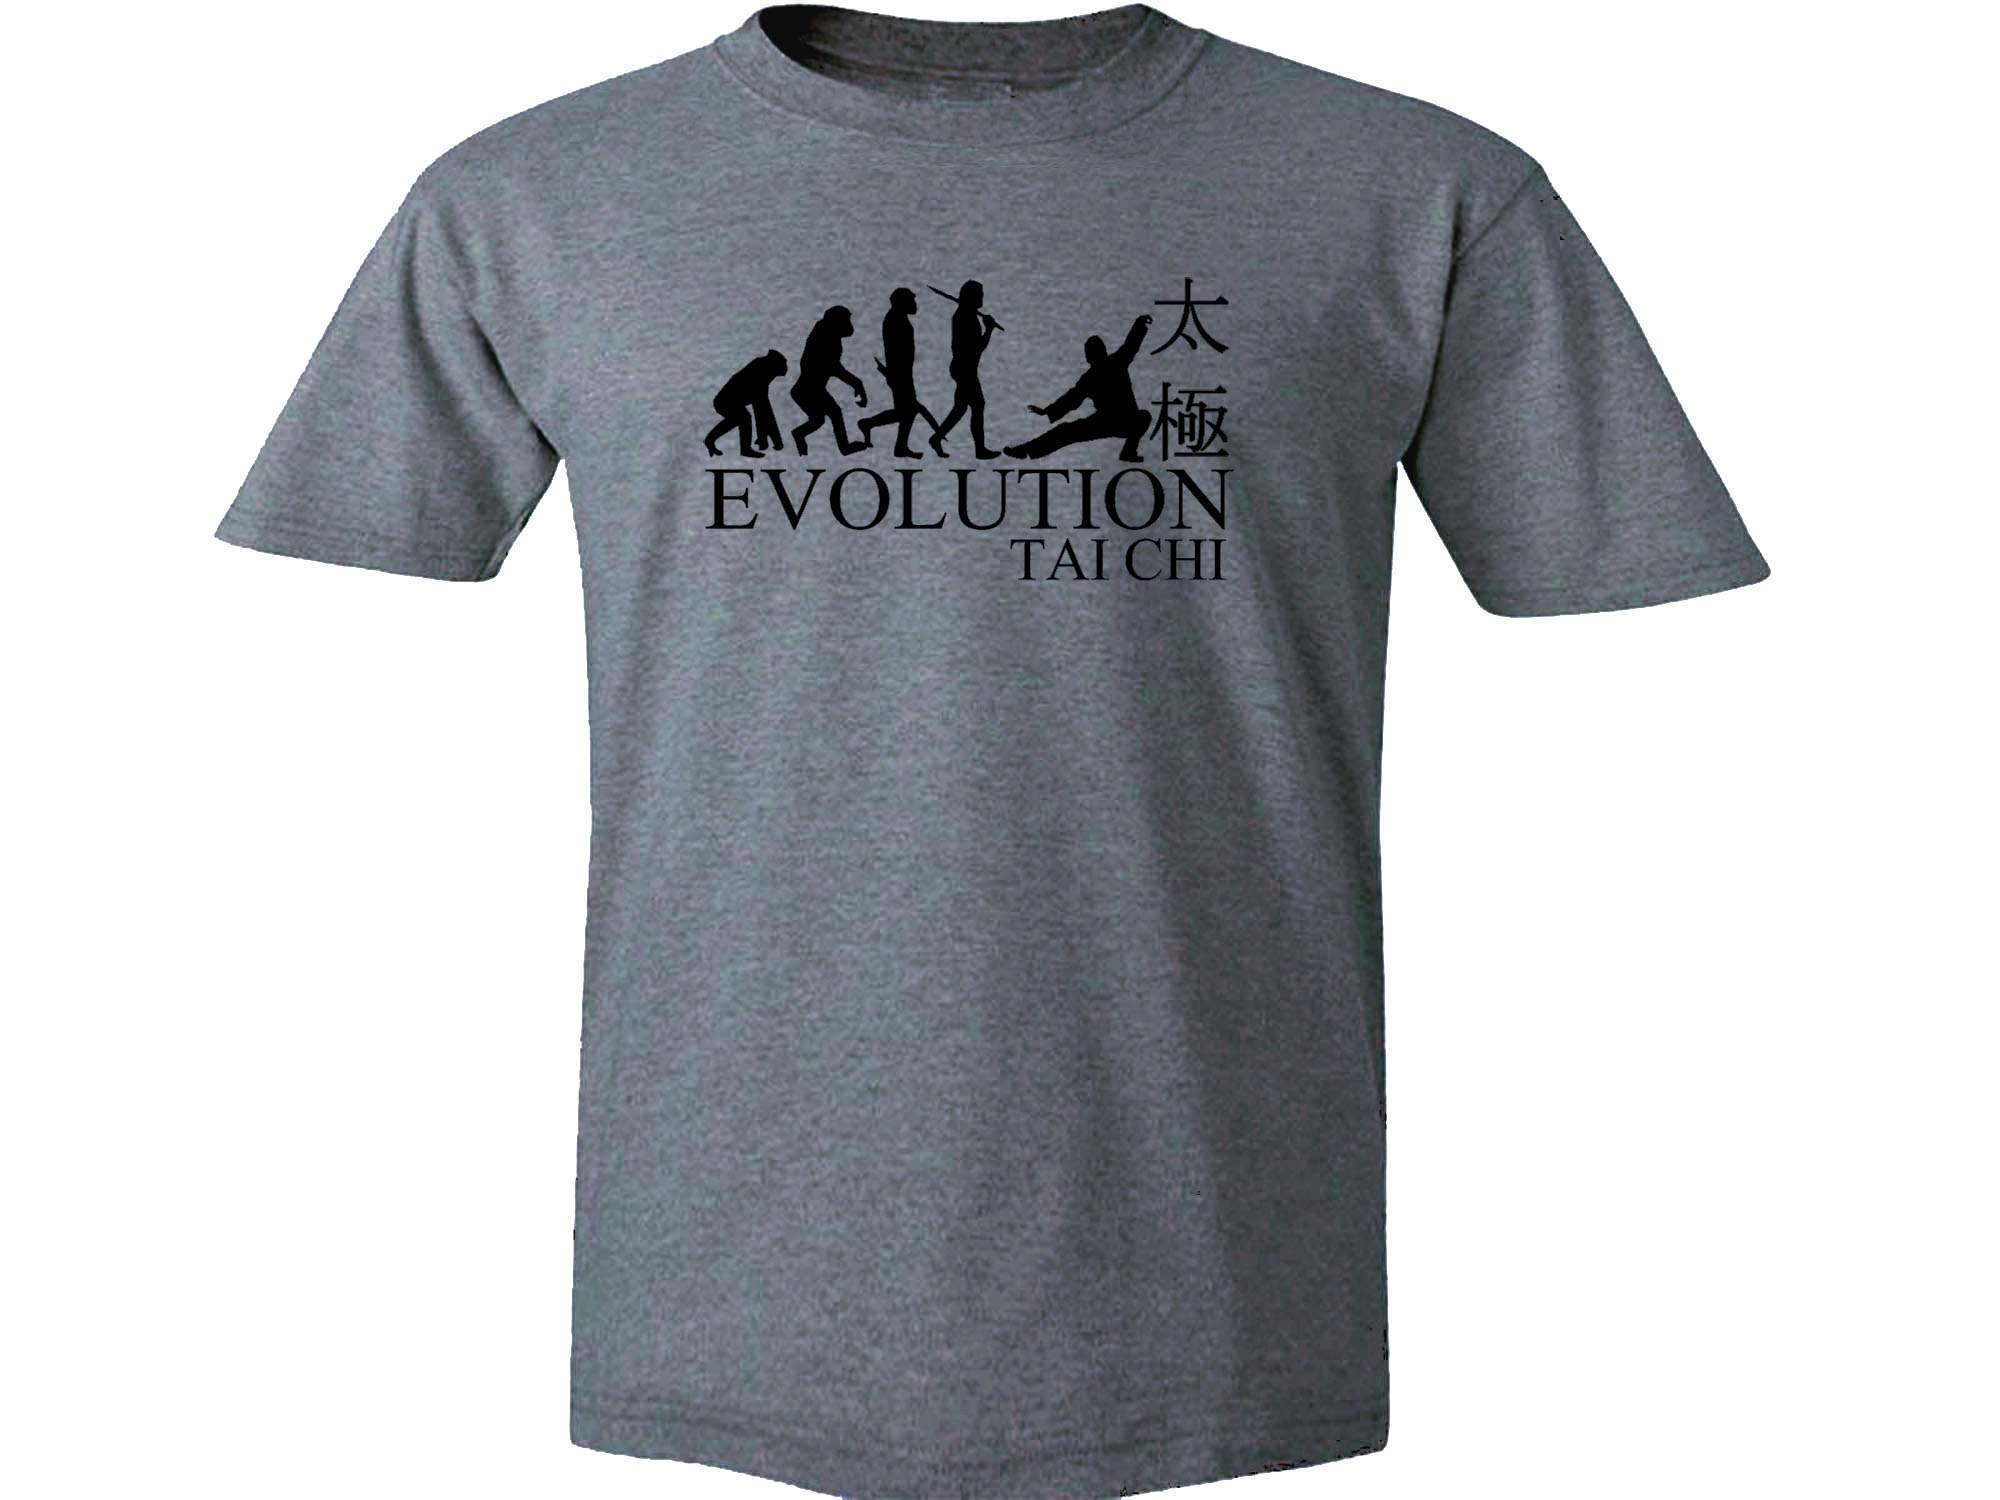 Tai Chi evolution Martial arts 100% cotton graphic t-shirt